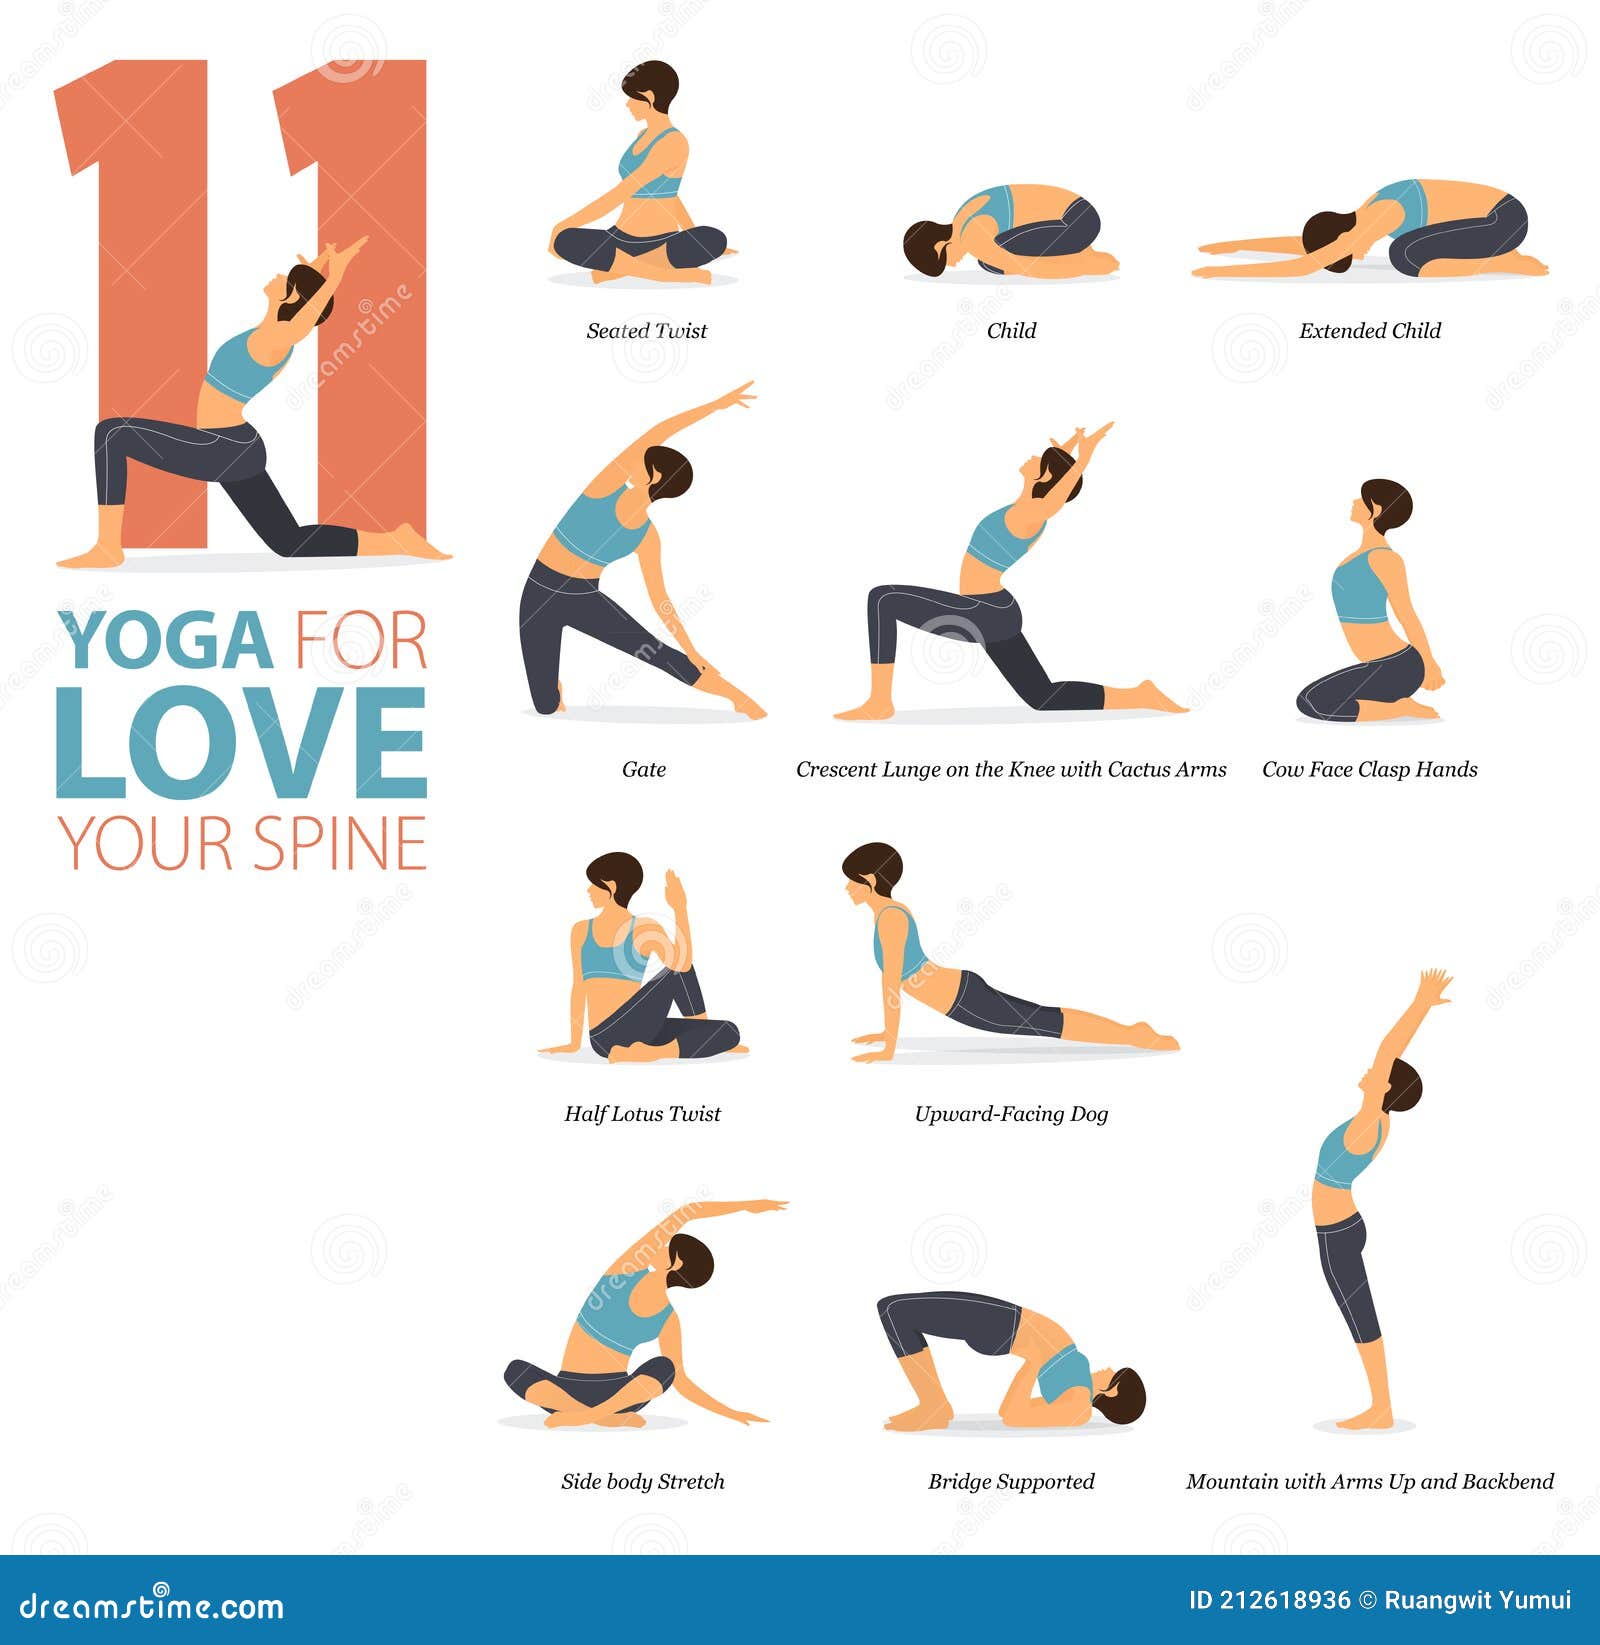 love this #yoga | Partner yoga, Couples yoga, Yoga photos